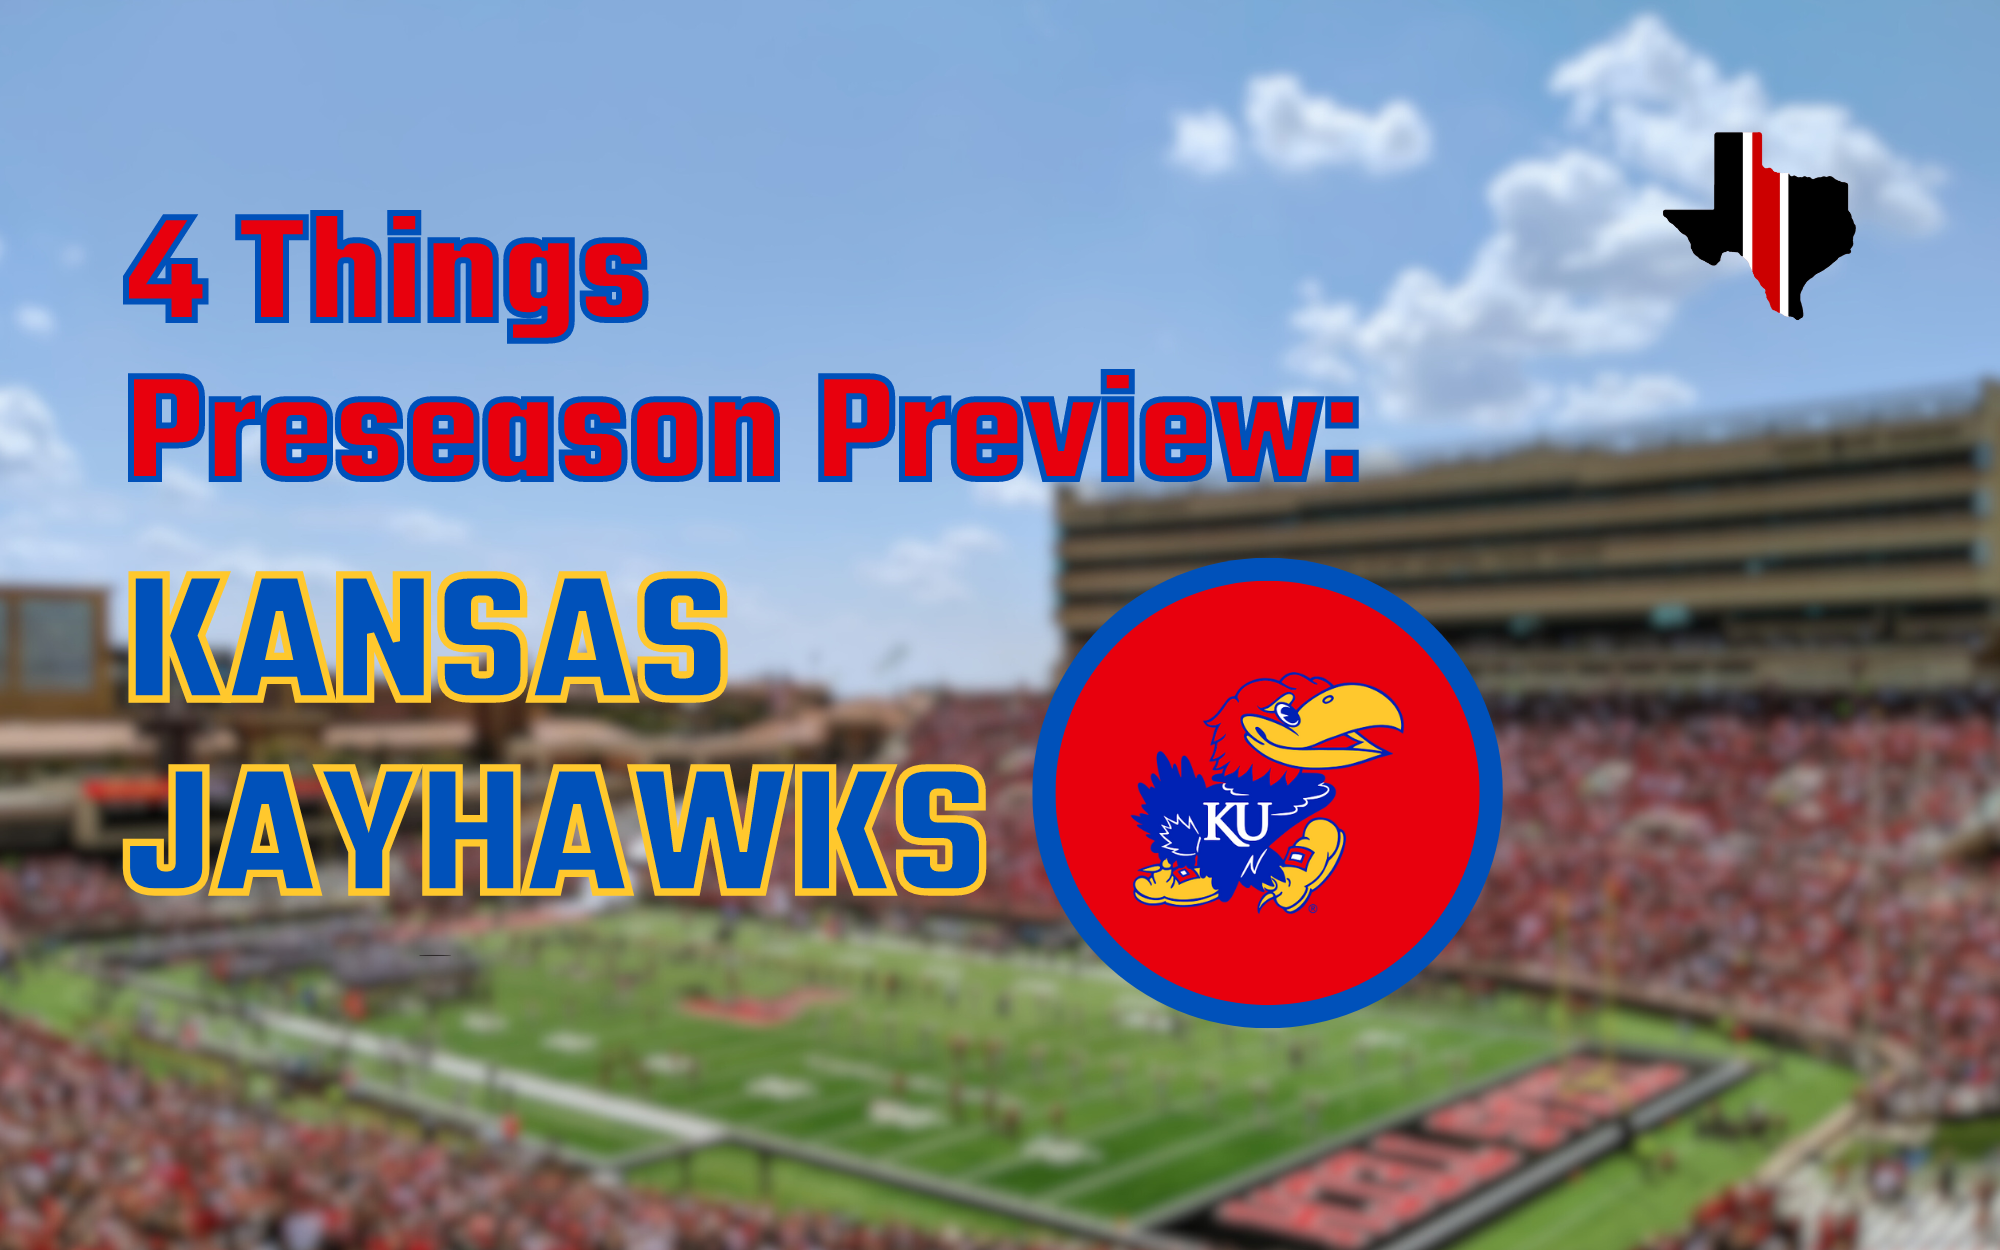 4 Things Preseason Preview: Kansas Jayhawks